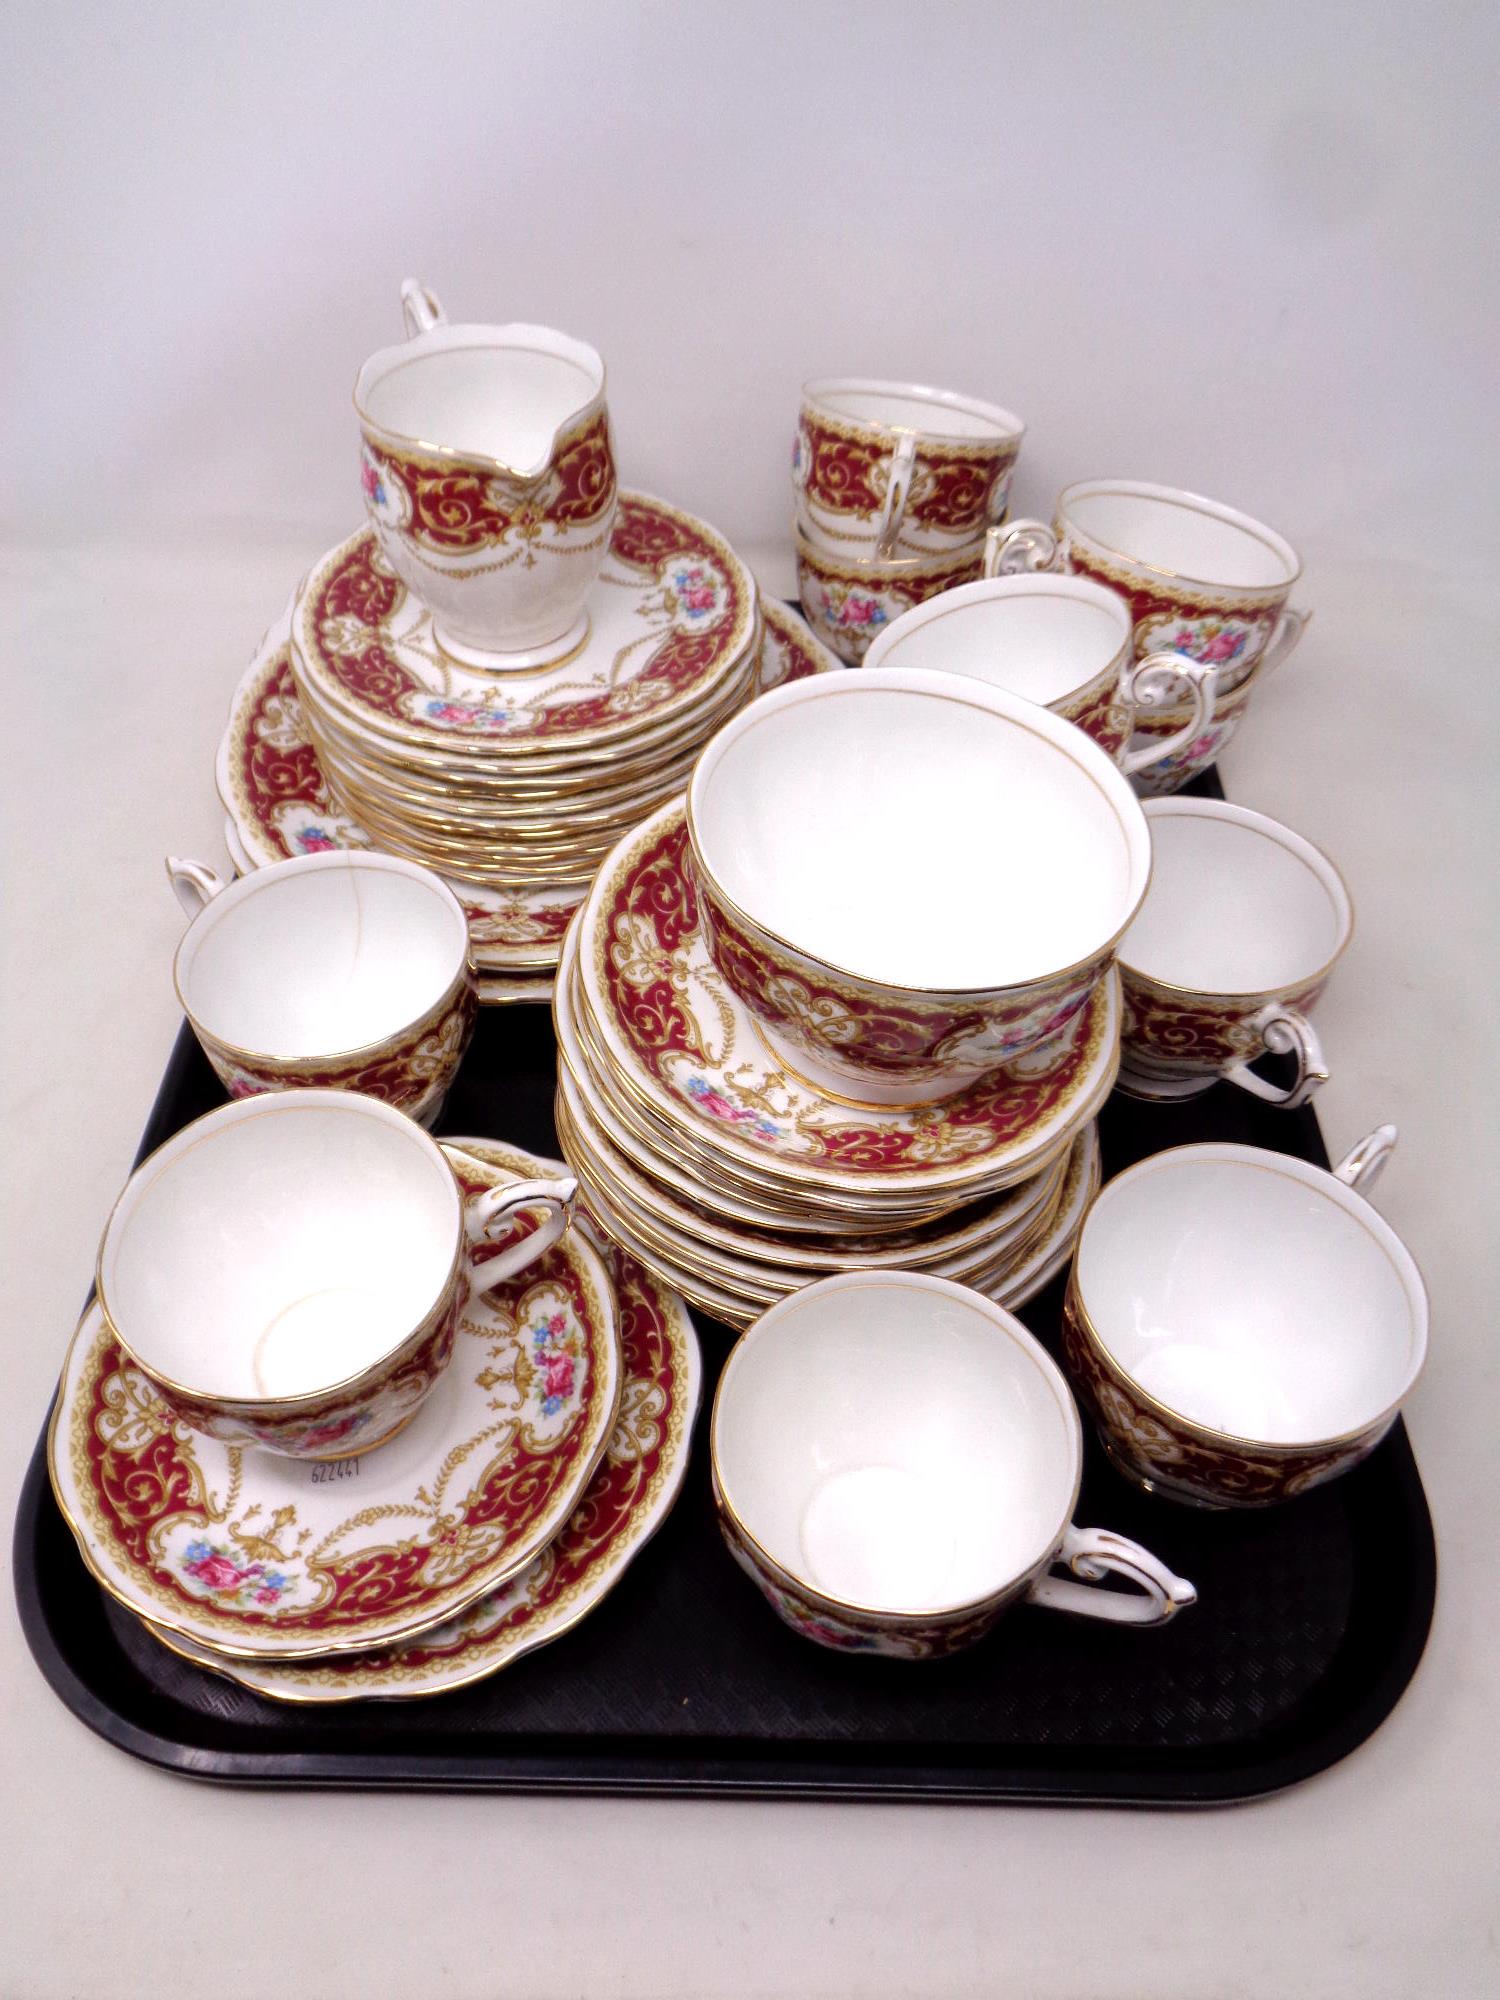 A tray of Queen Anne Regency style bone china tea service